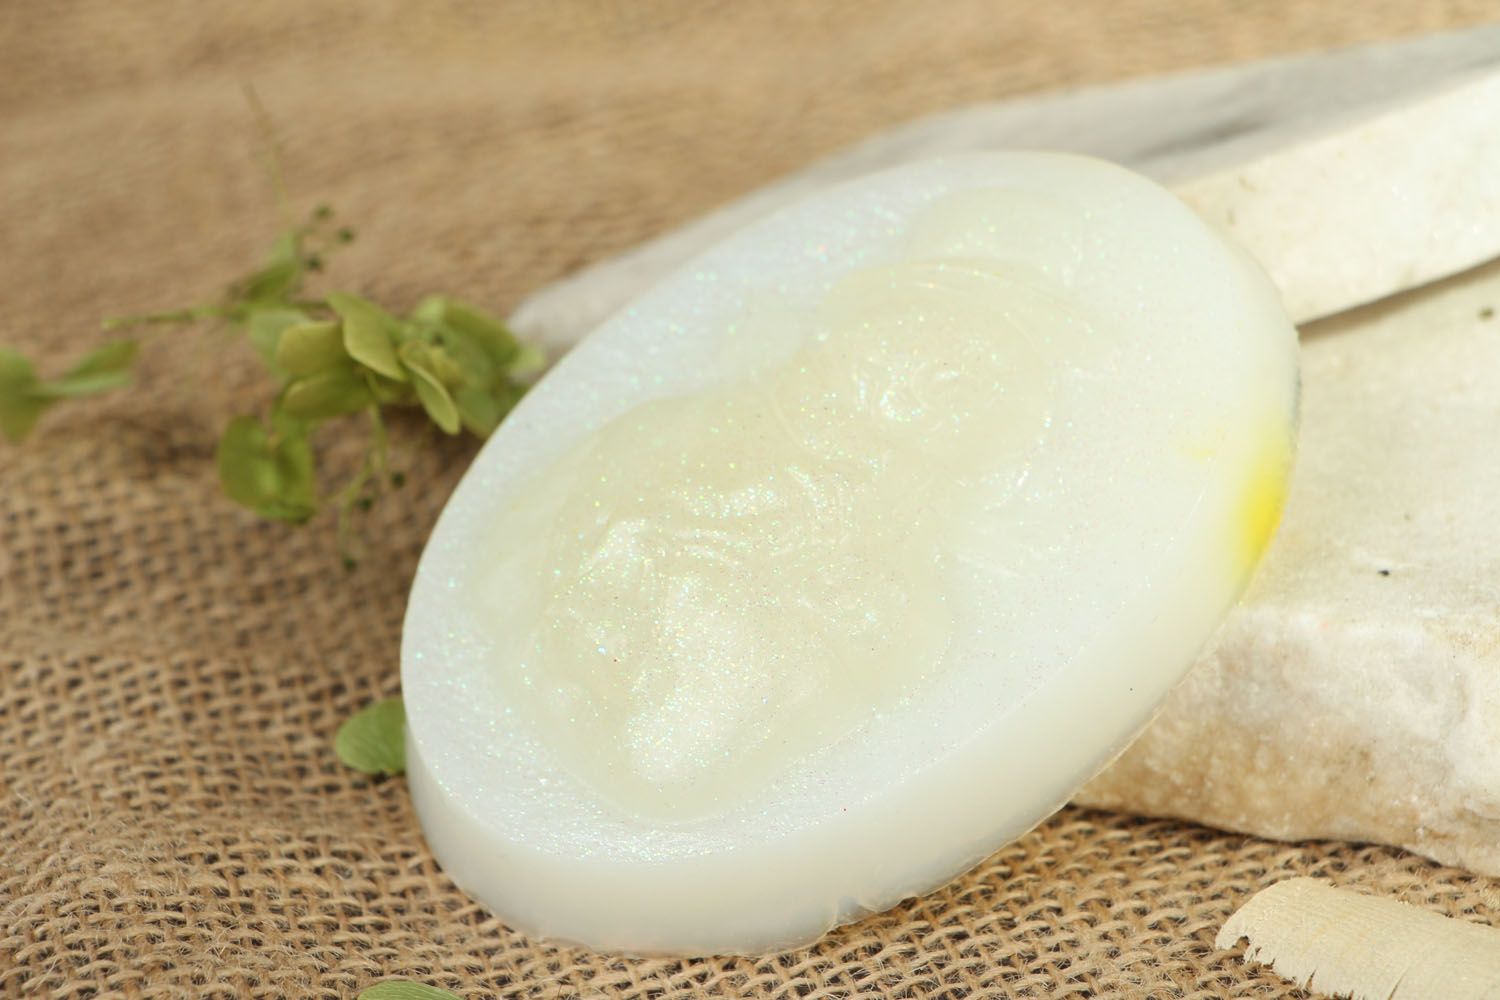 Homemade white soap photo 4